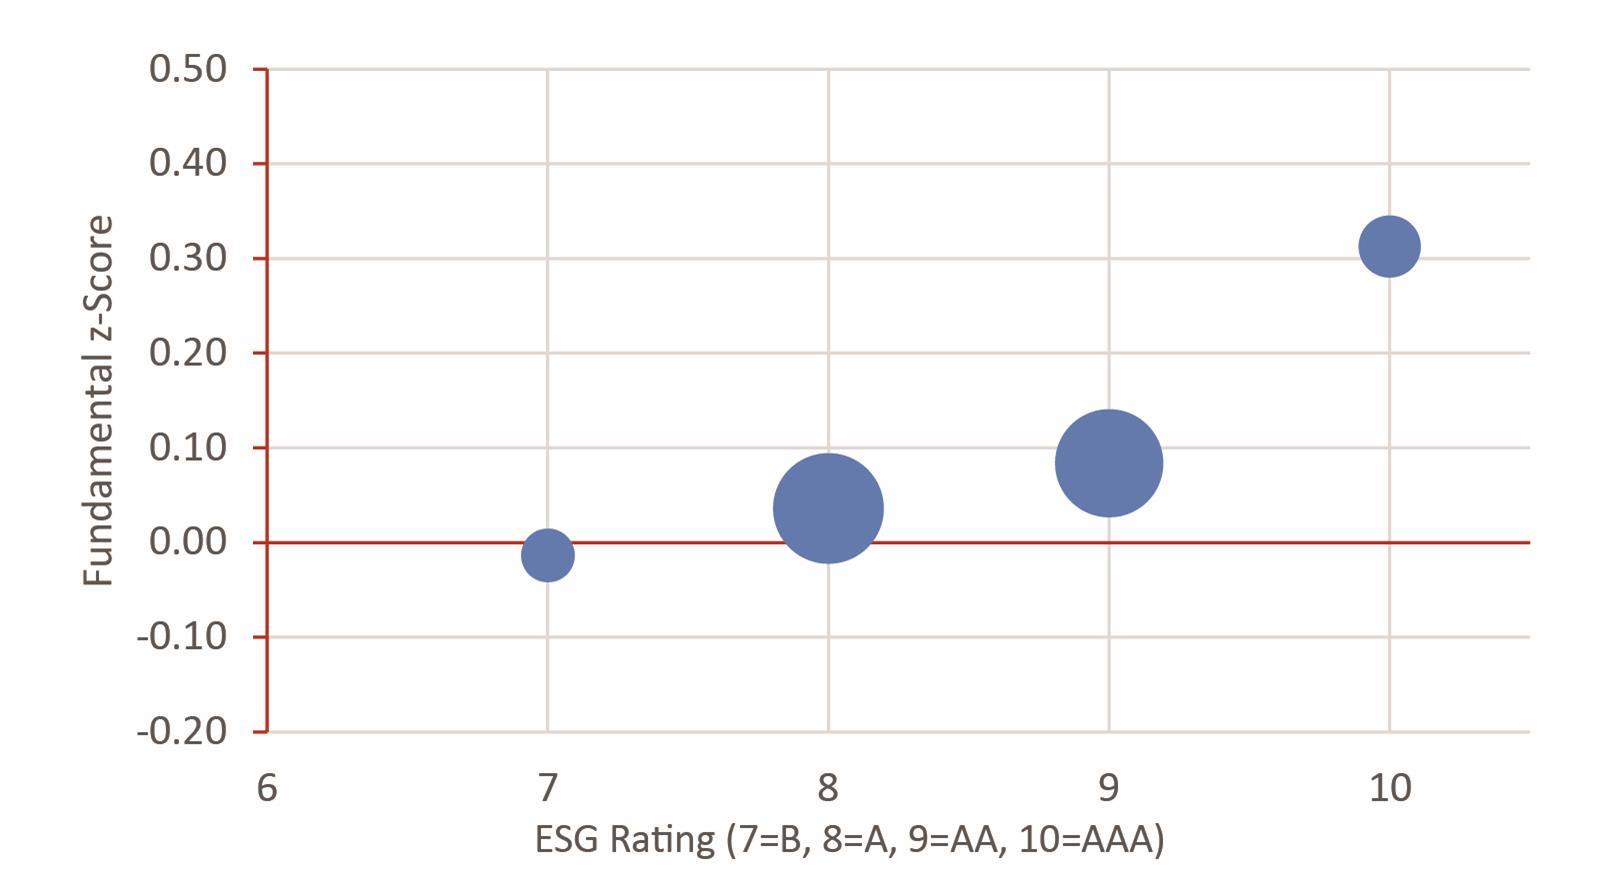 Chart 3: ClearBridge ESG ratings vs standardised overall fundamental scores